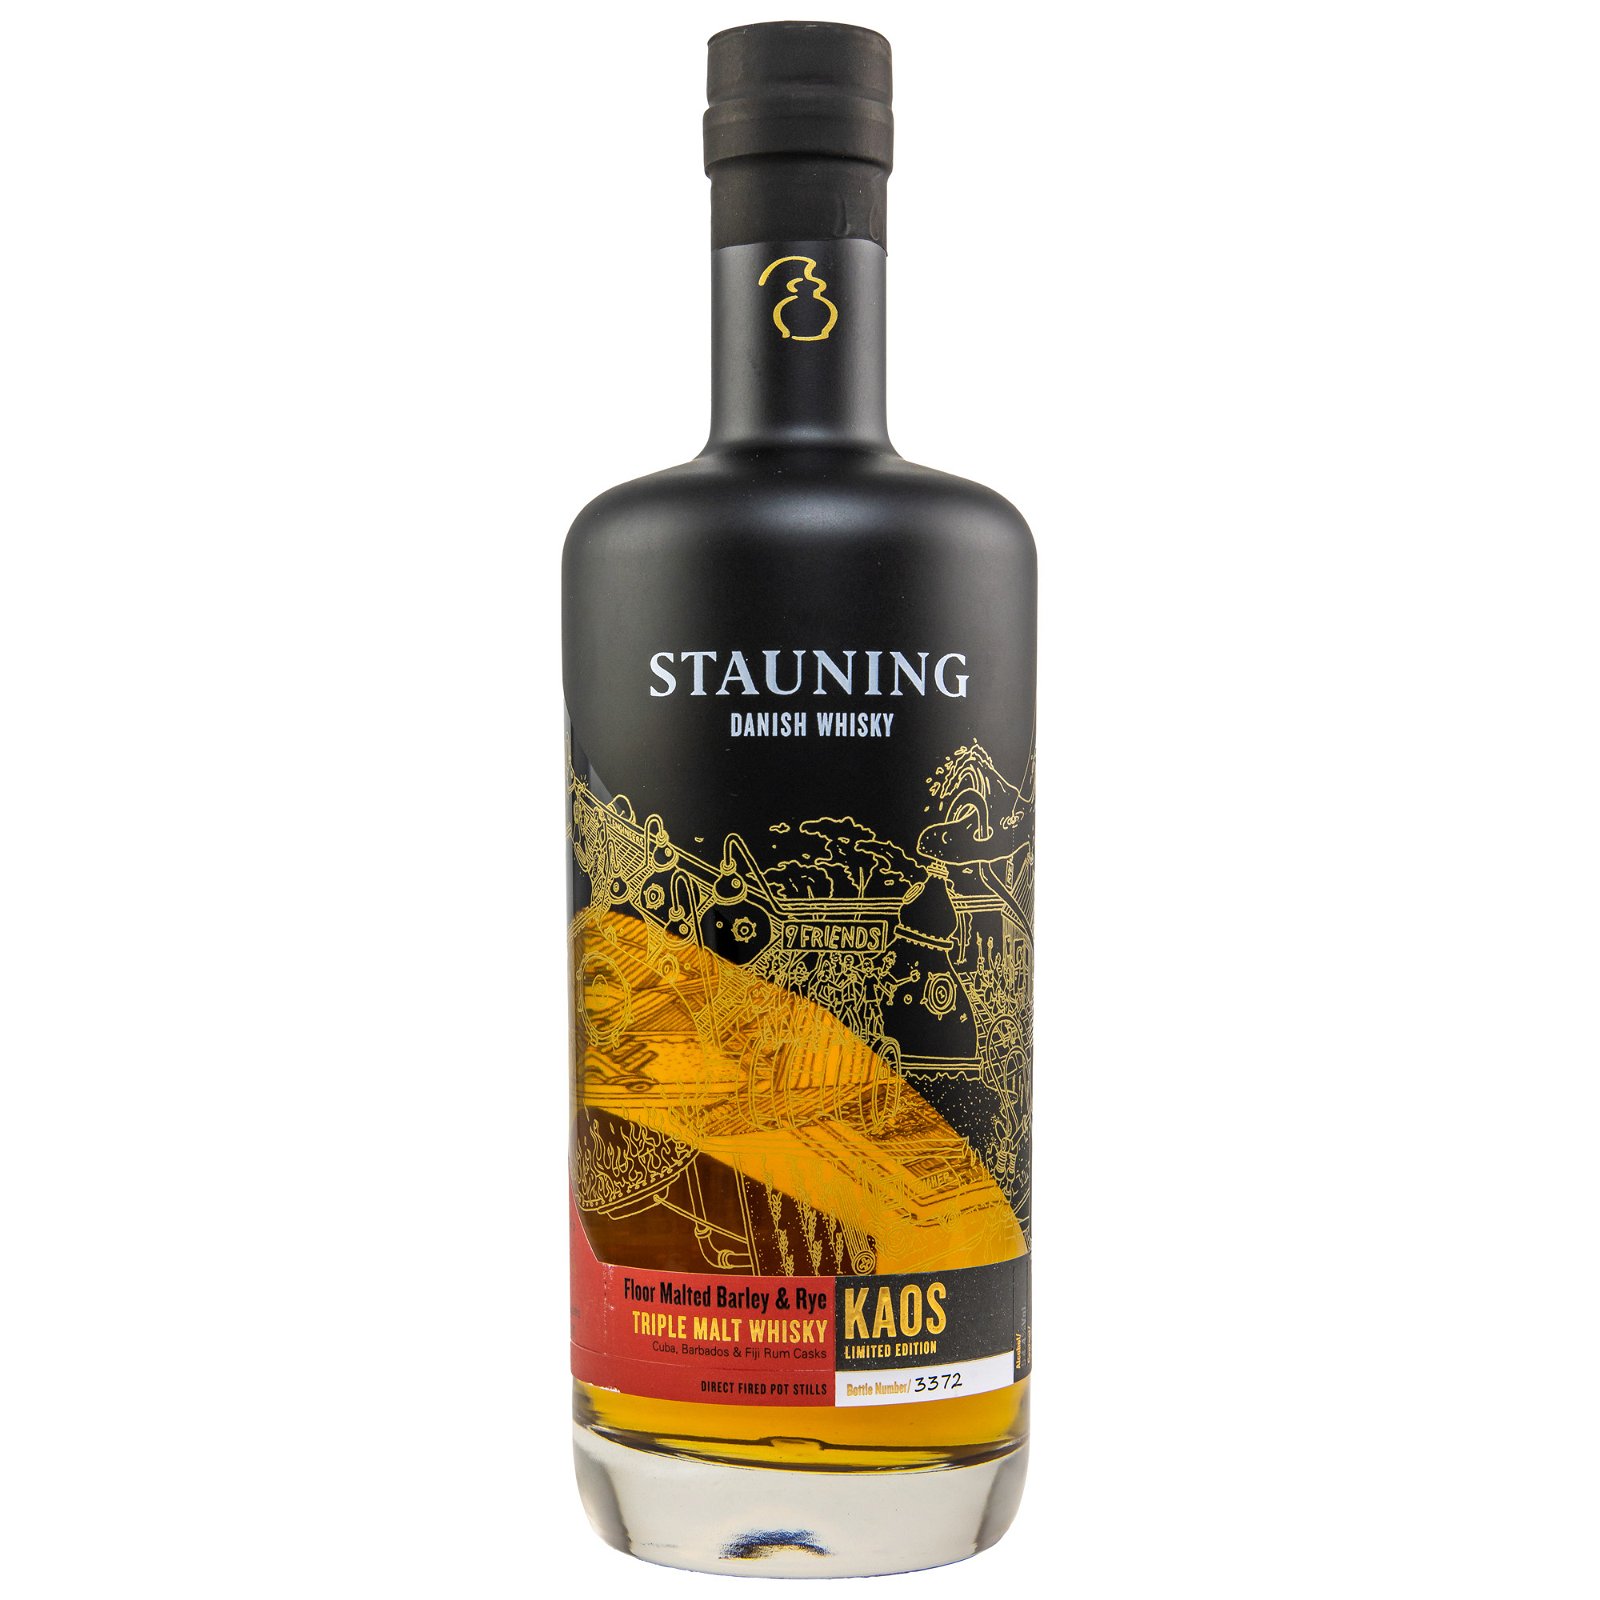 Stauning KAOS Triple Malt Whisky Rum Casks